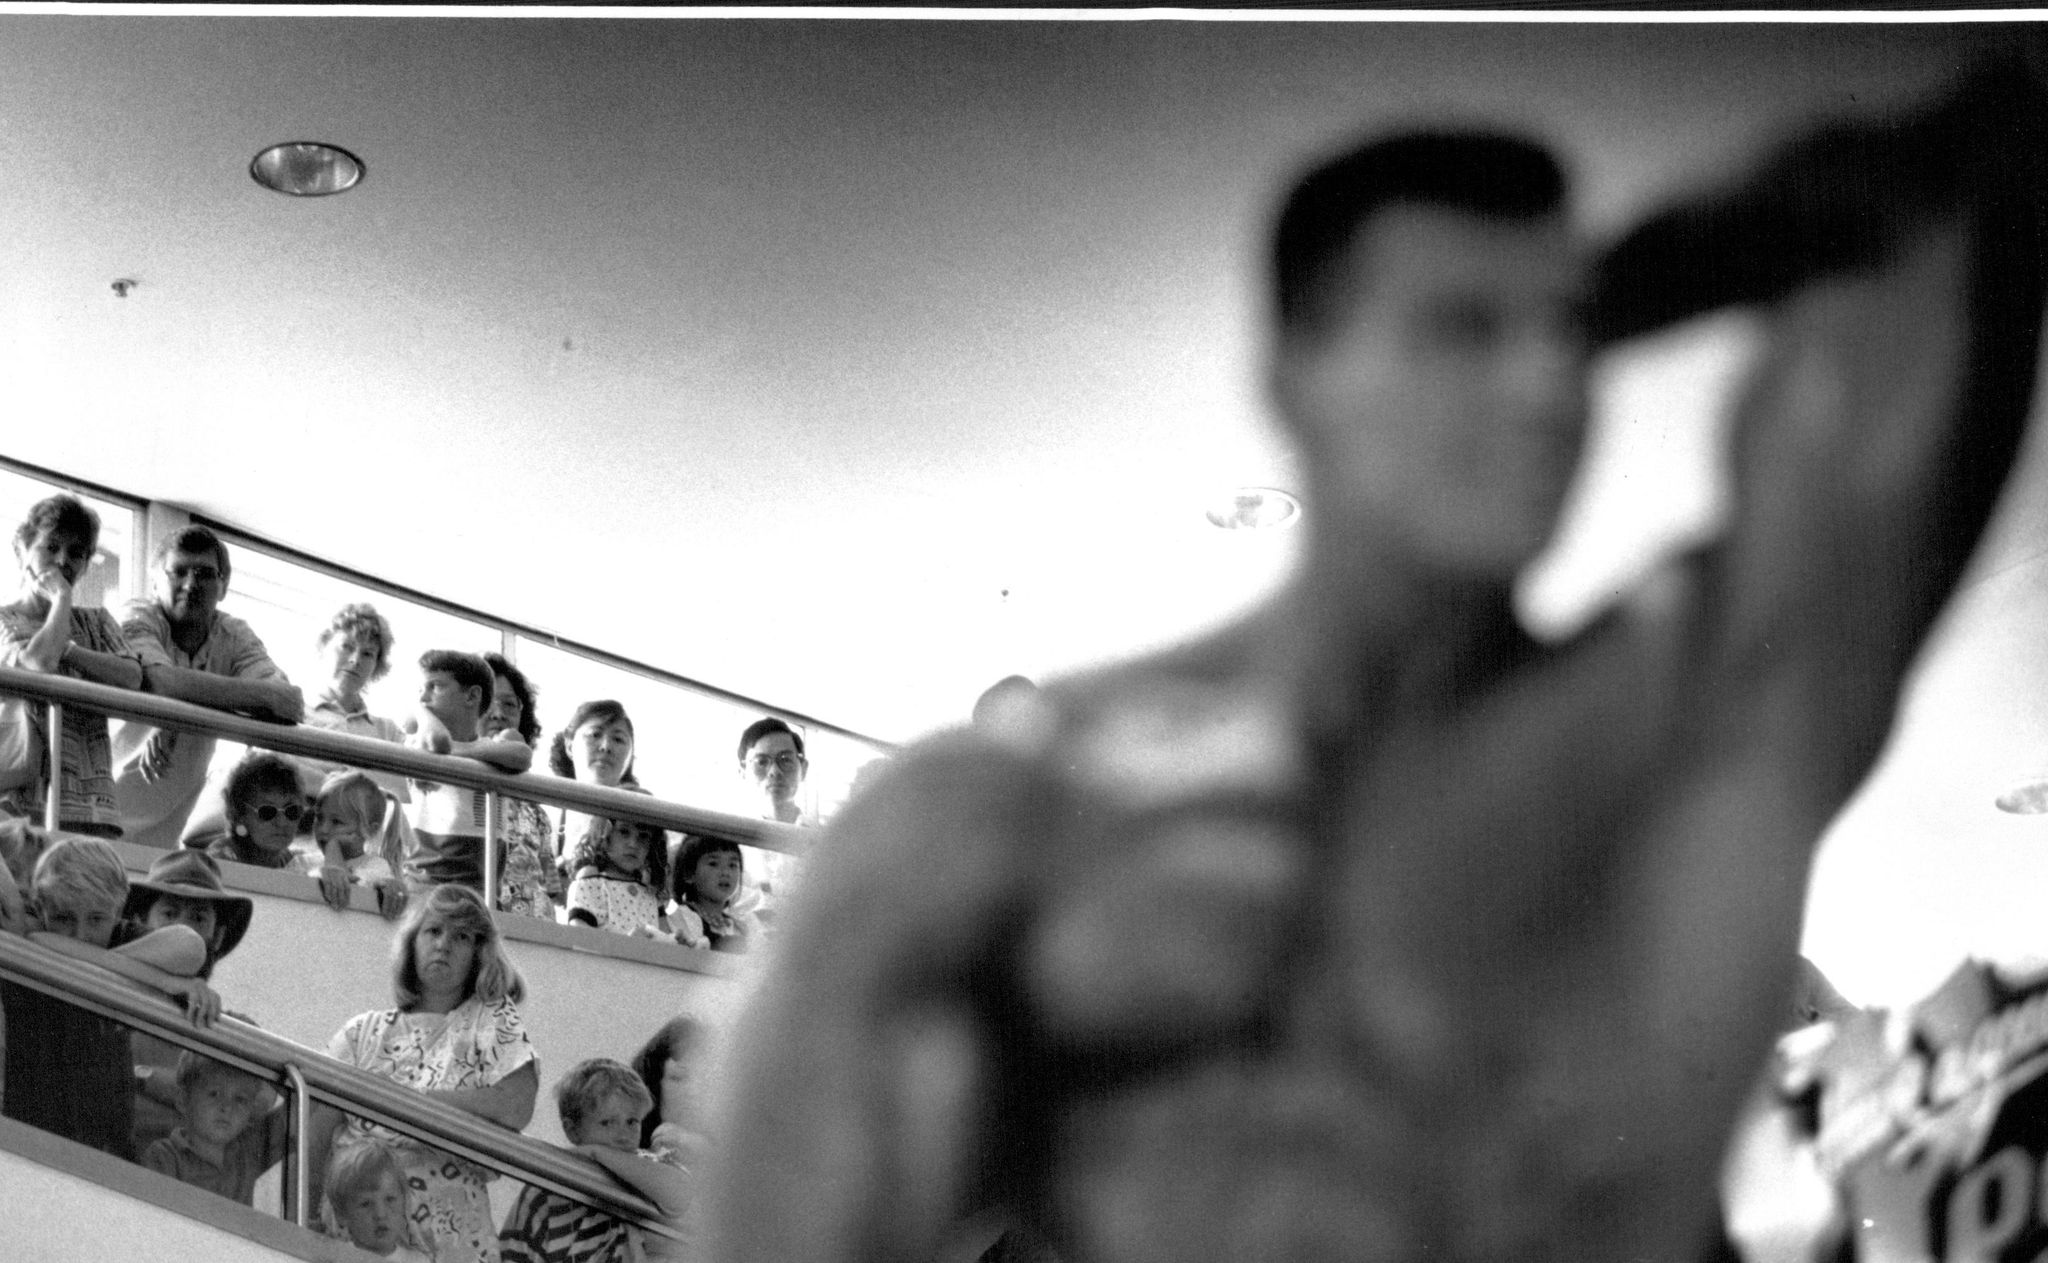 international federation of bodybuilders best overall champion at westfield miranda october 07, 1991 photo by philip wayne lockfairfax media via getty images